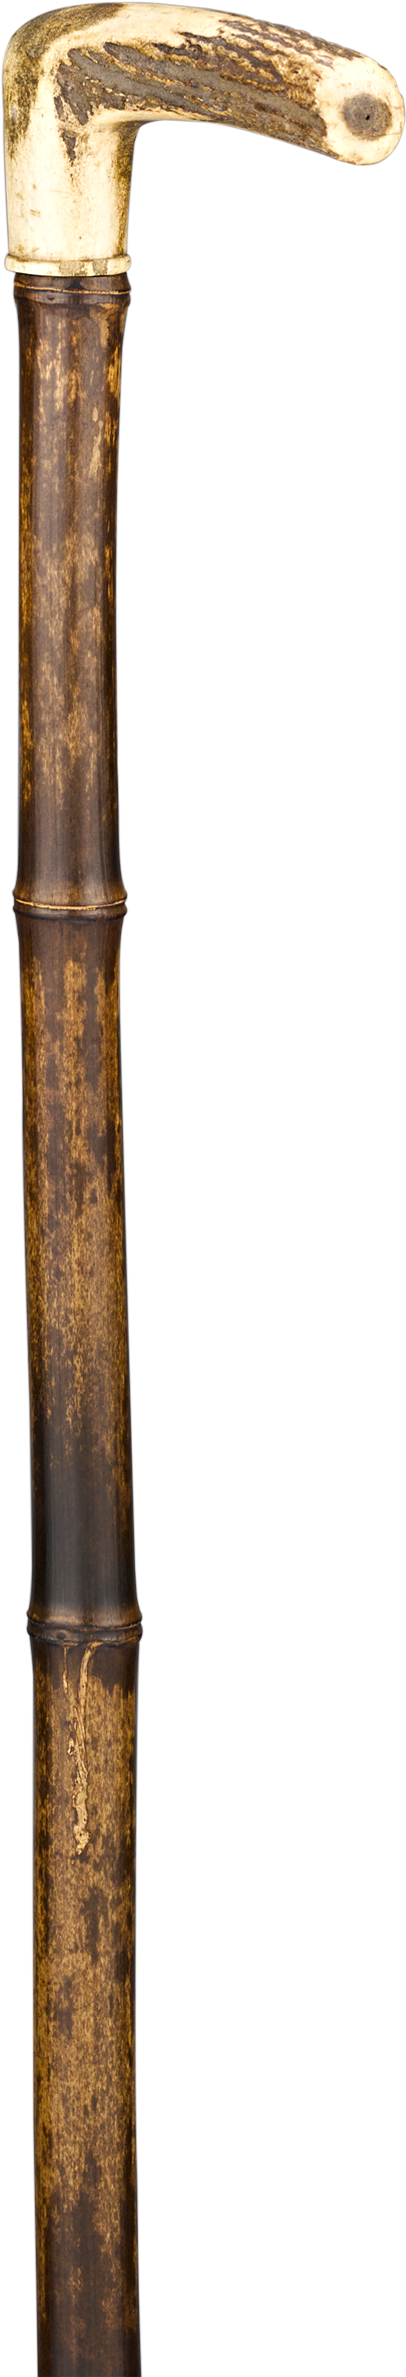 Antique Wooden Walking Stick PNG